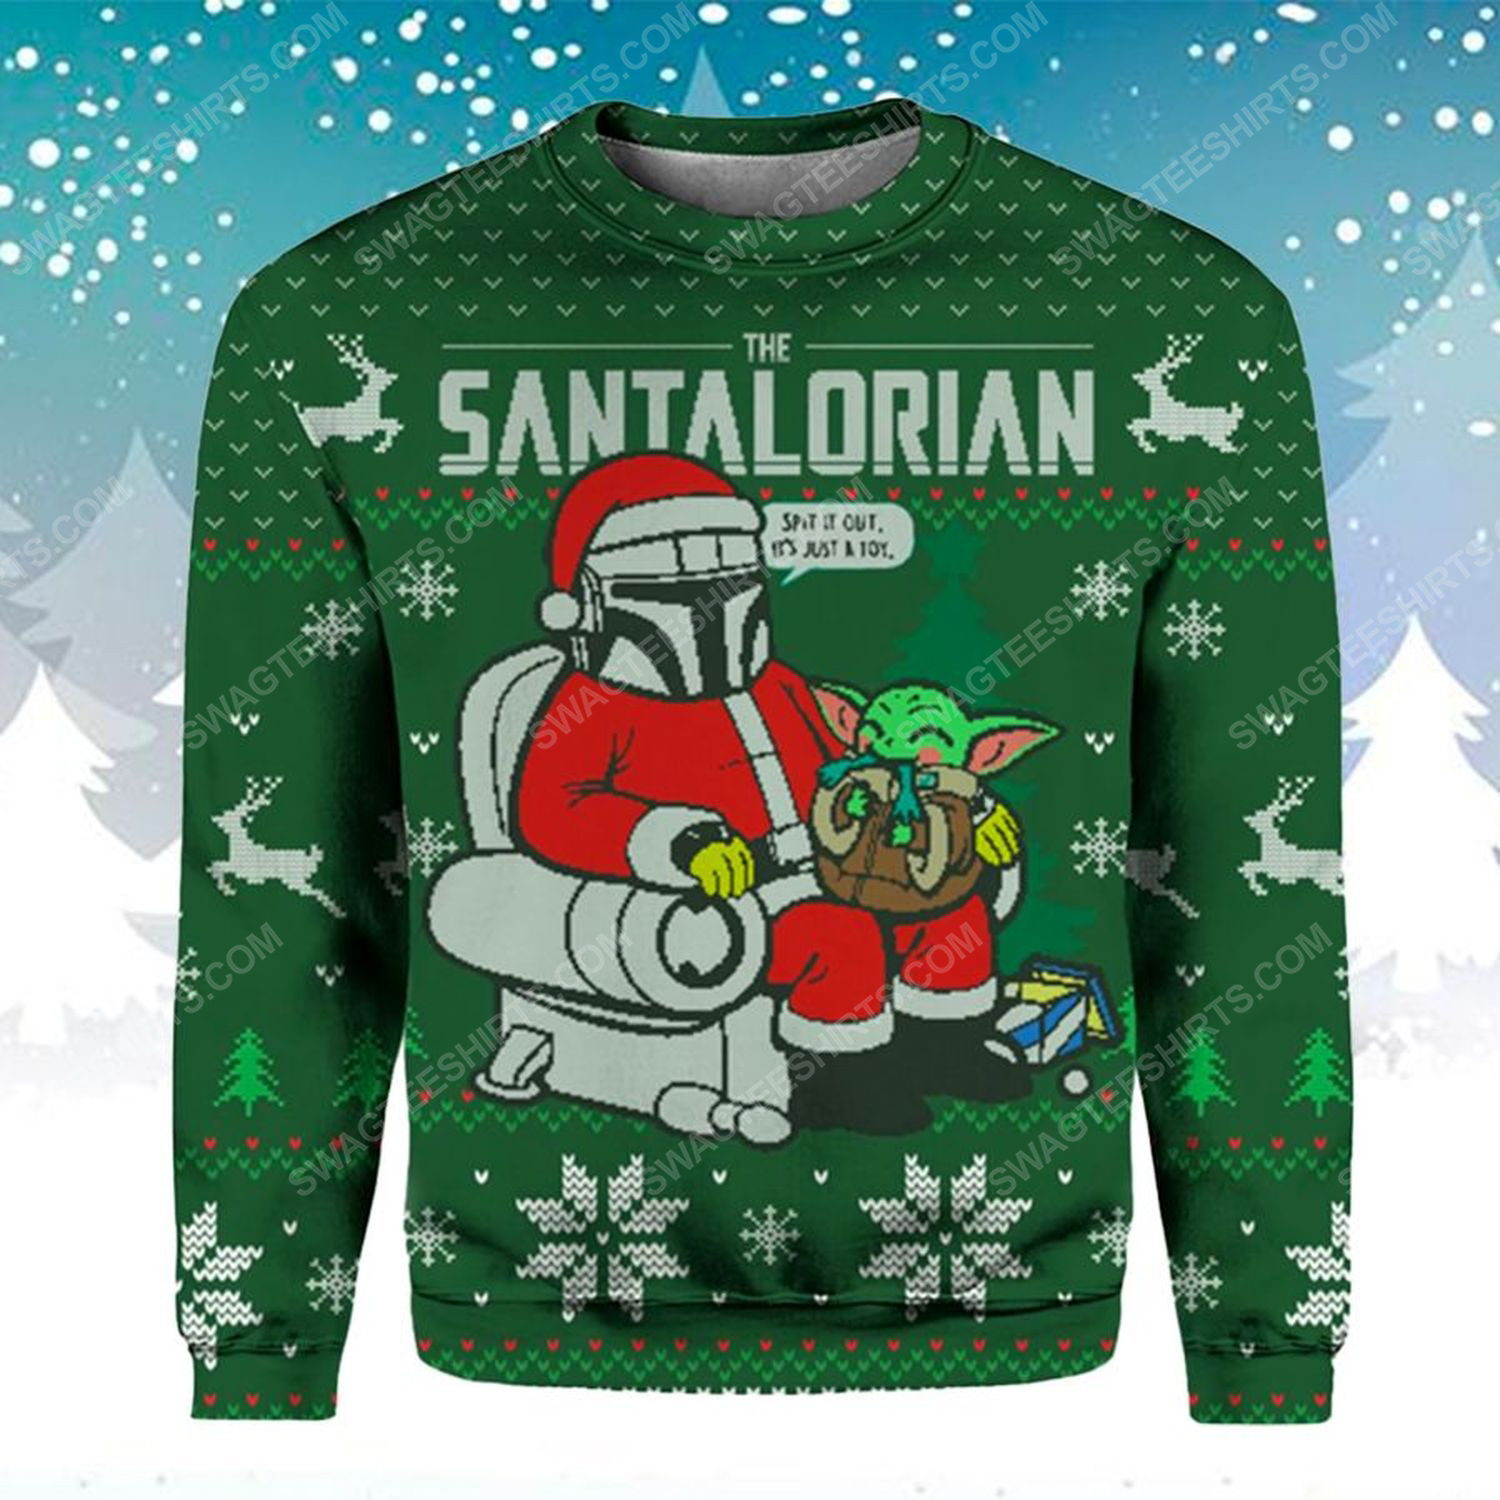 Star wars the santalorian ugly christmas sweater - Copy (2)